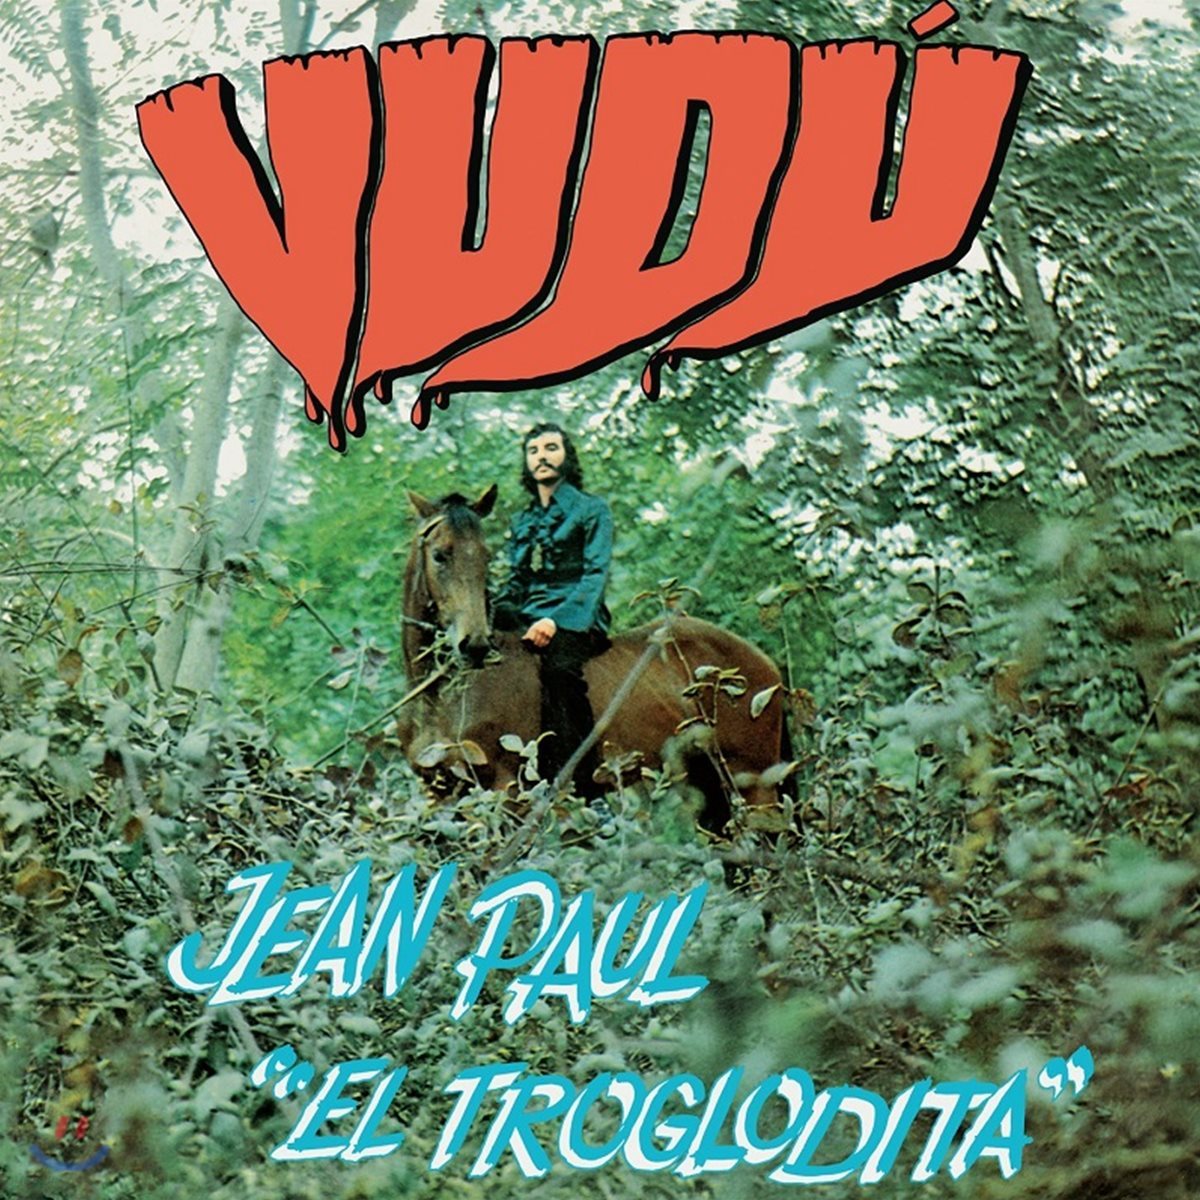 Jean Paul "El Troglodita" - Vudu [LP]